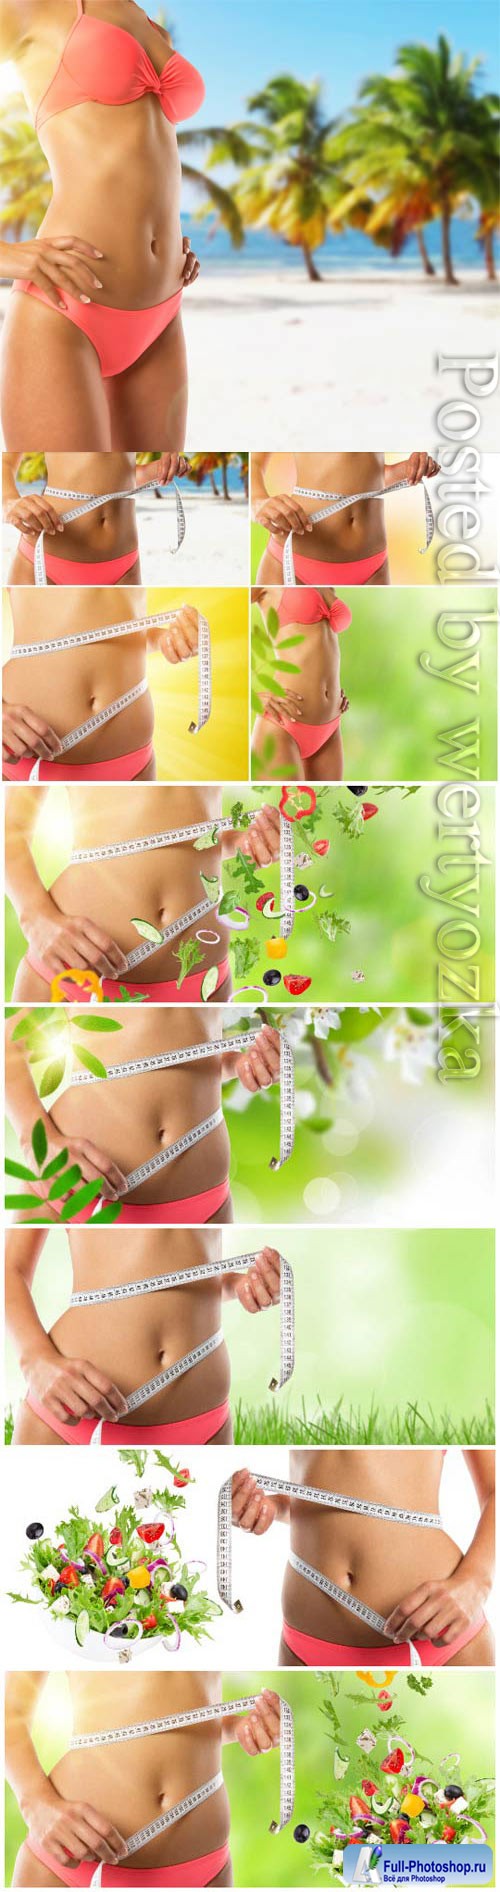 Healthy food concept, female figure stock photos